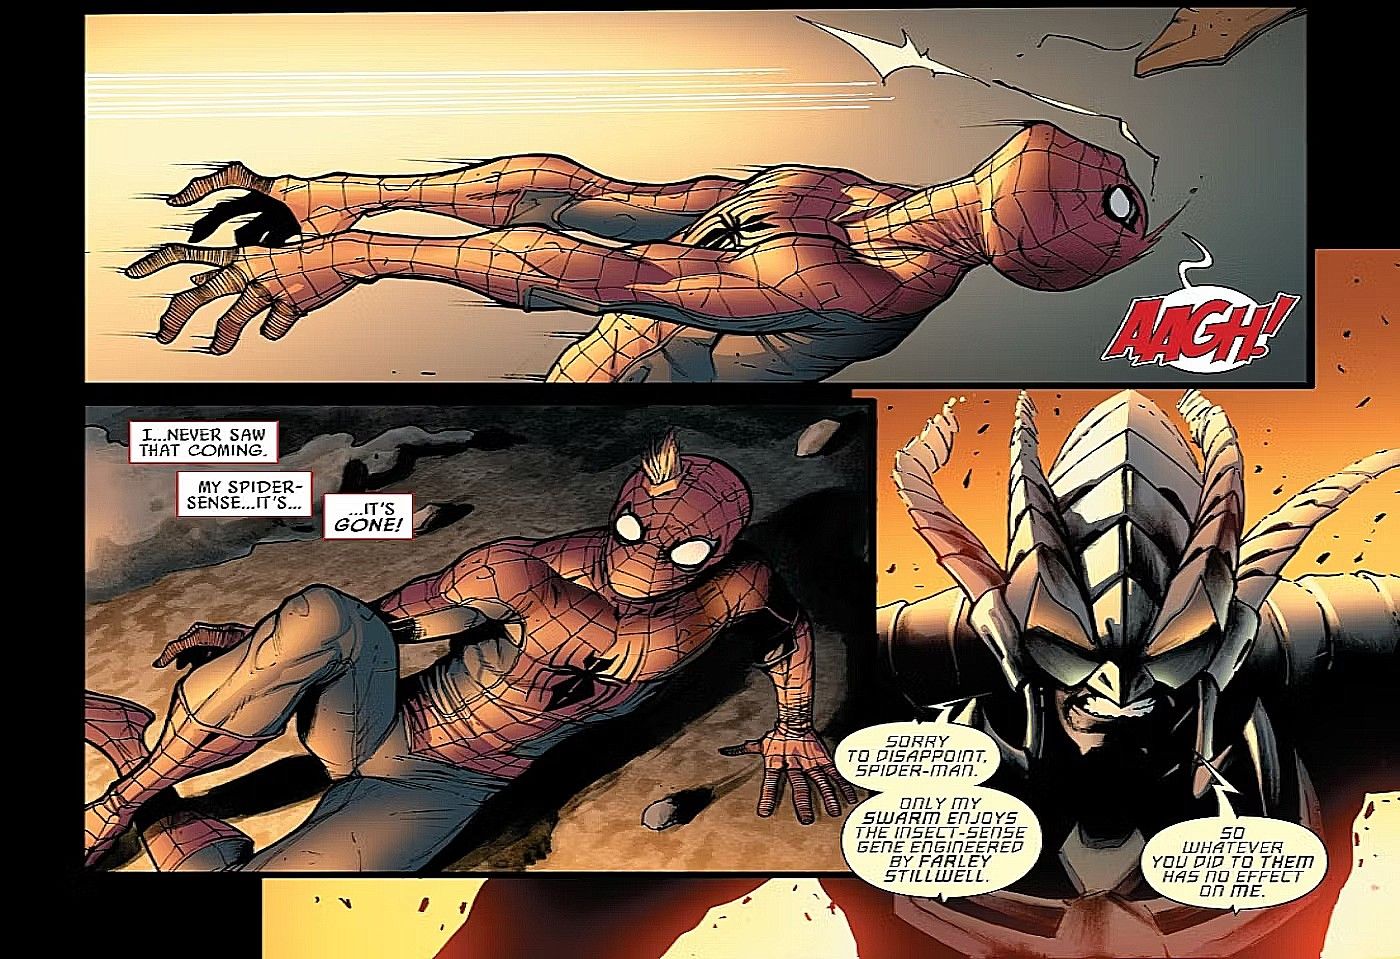 Amazing Spider Man #656, Peter realizes his spider-sense isn't working